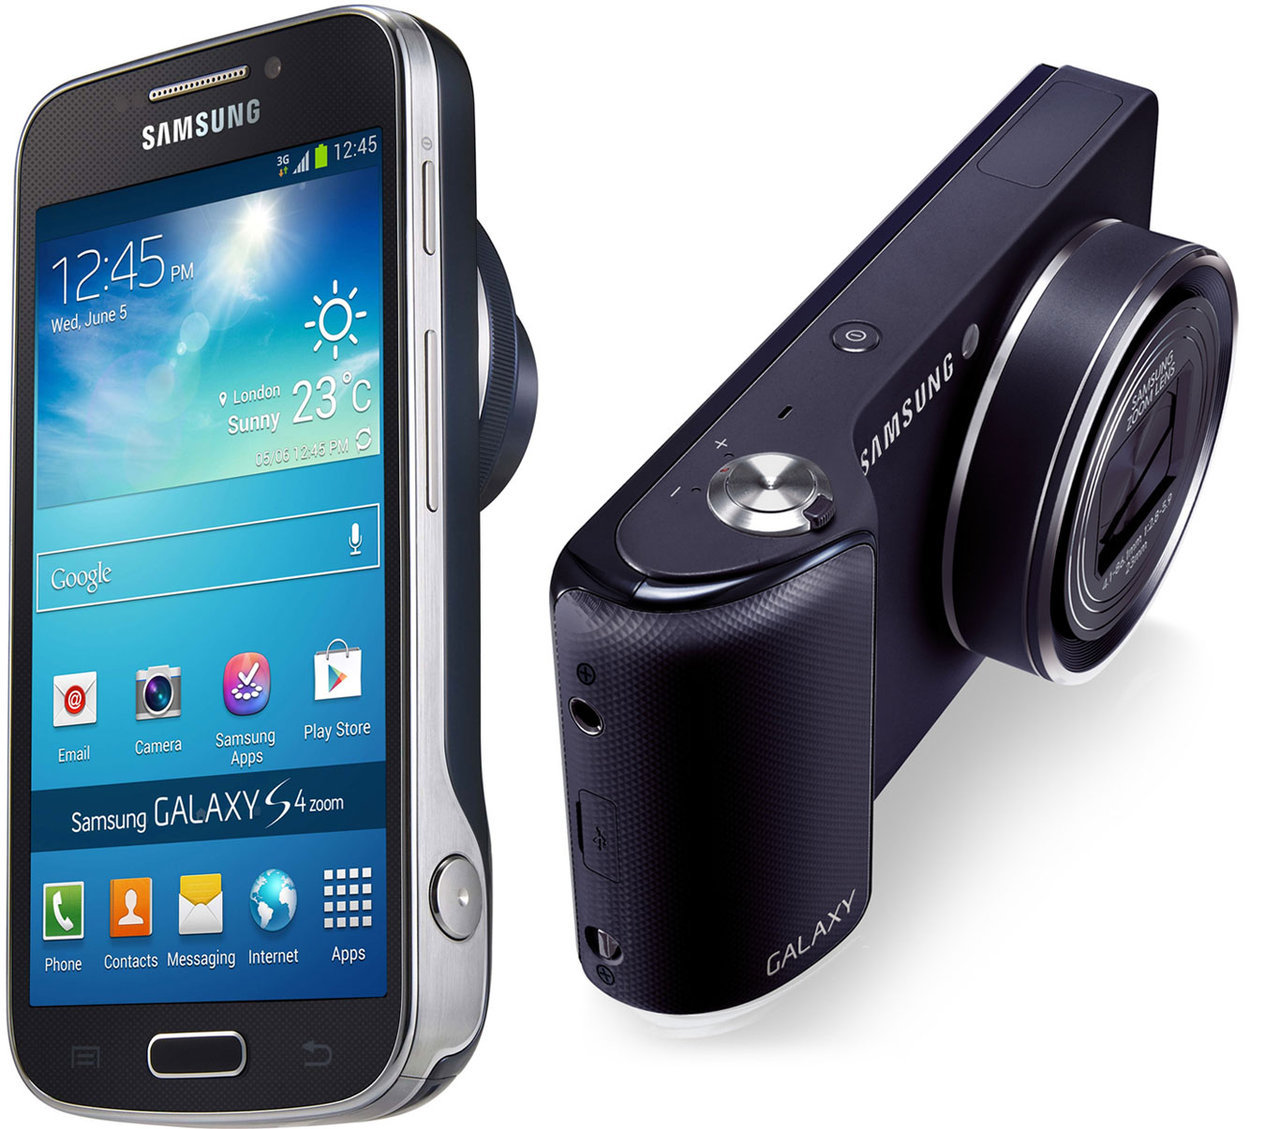 Samsung Galaxy s4 Zoom